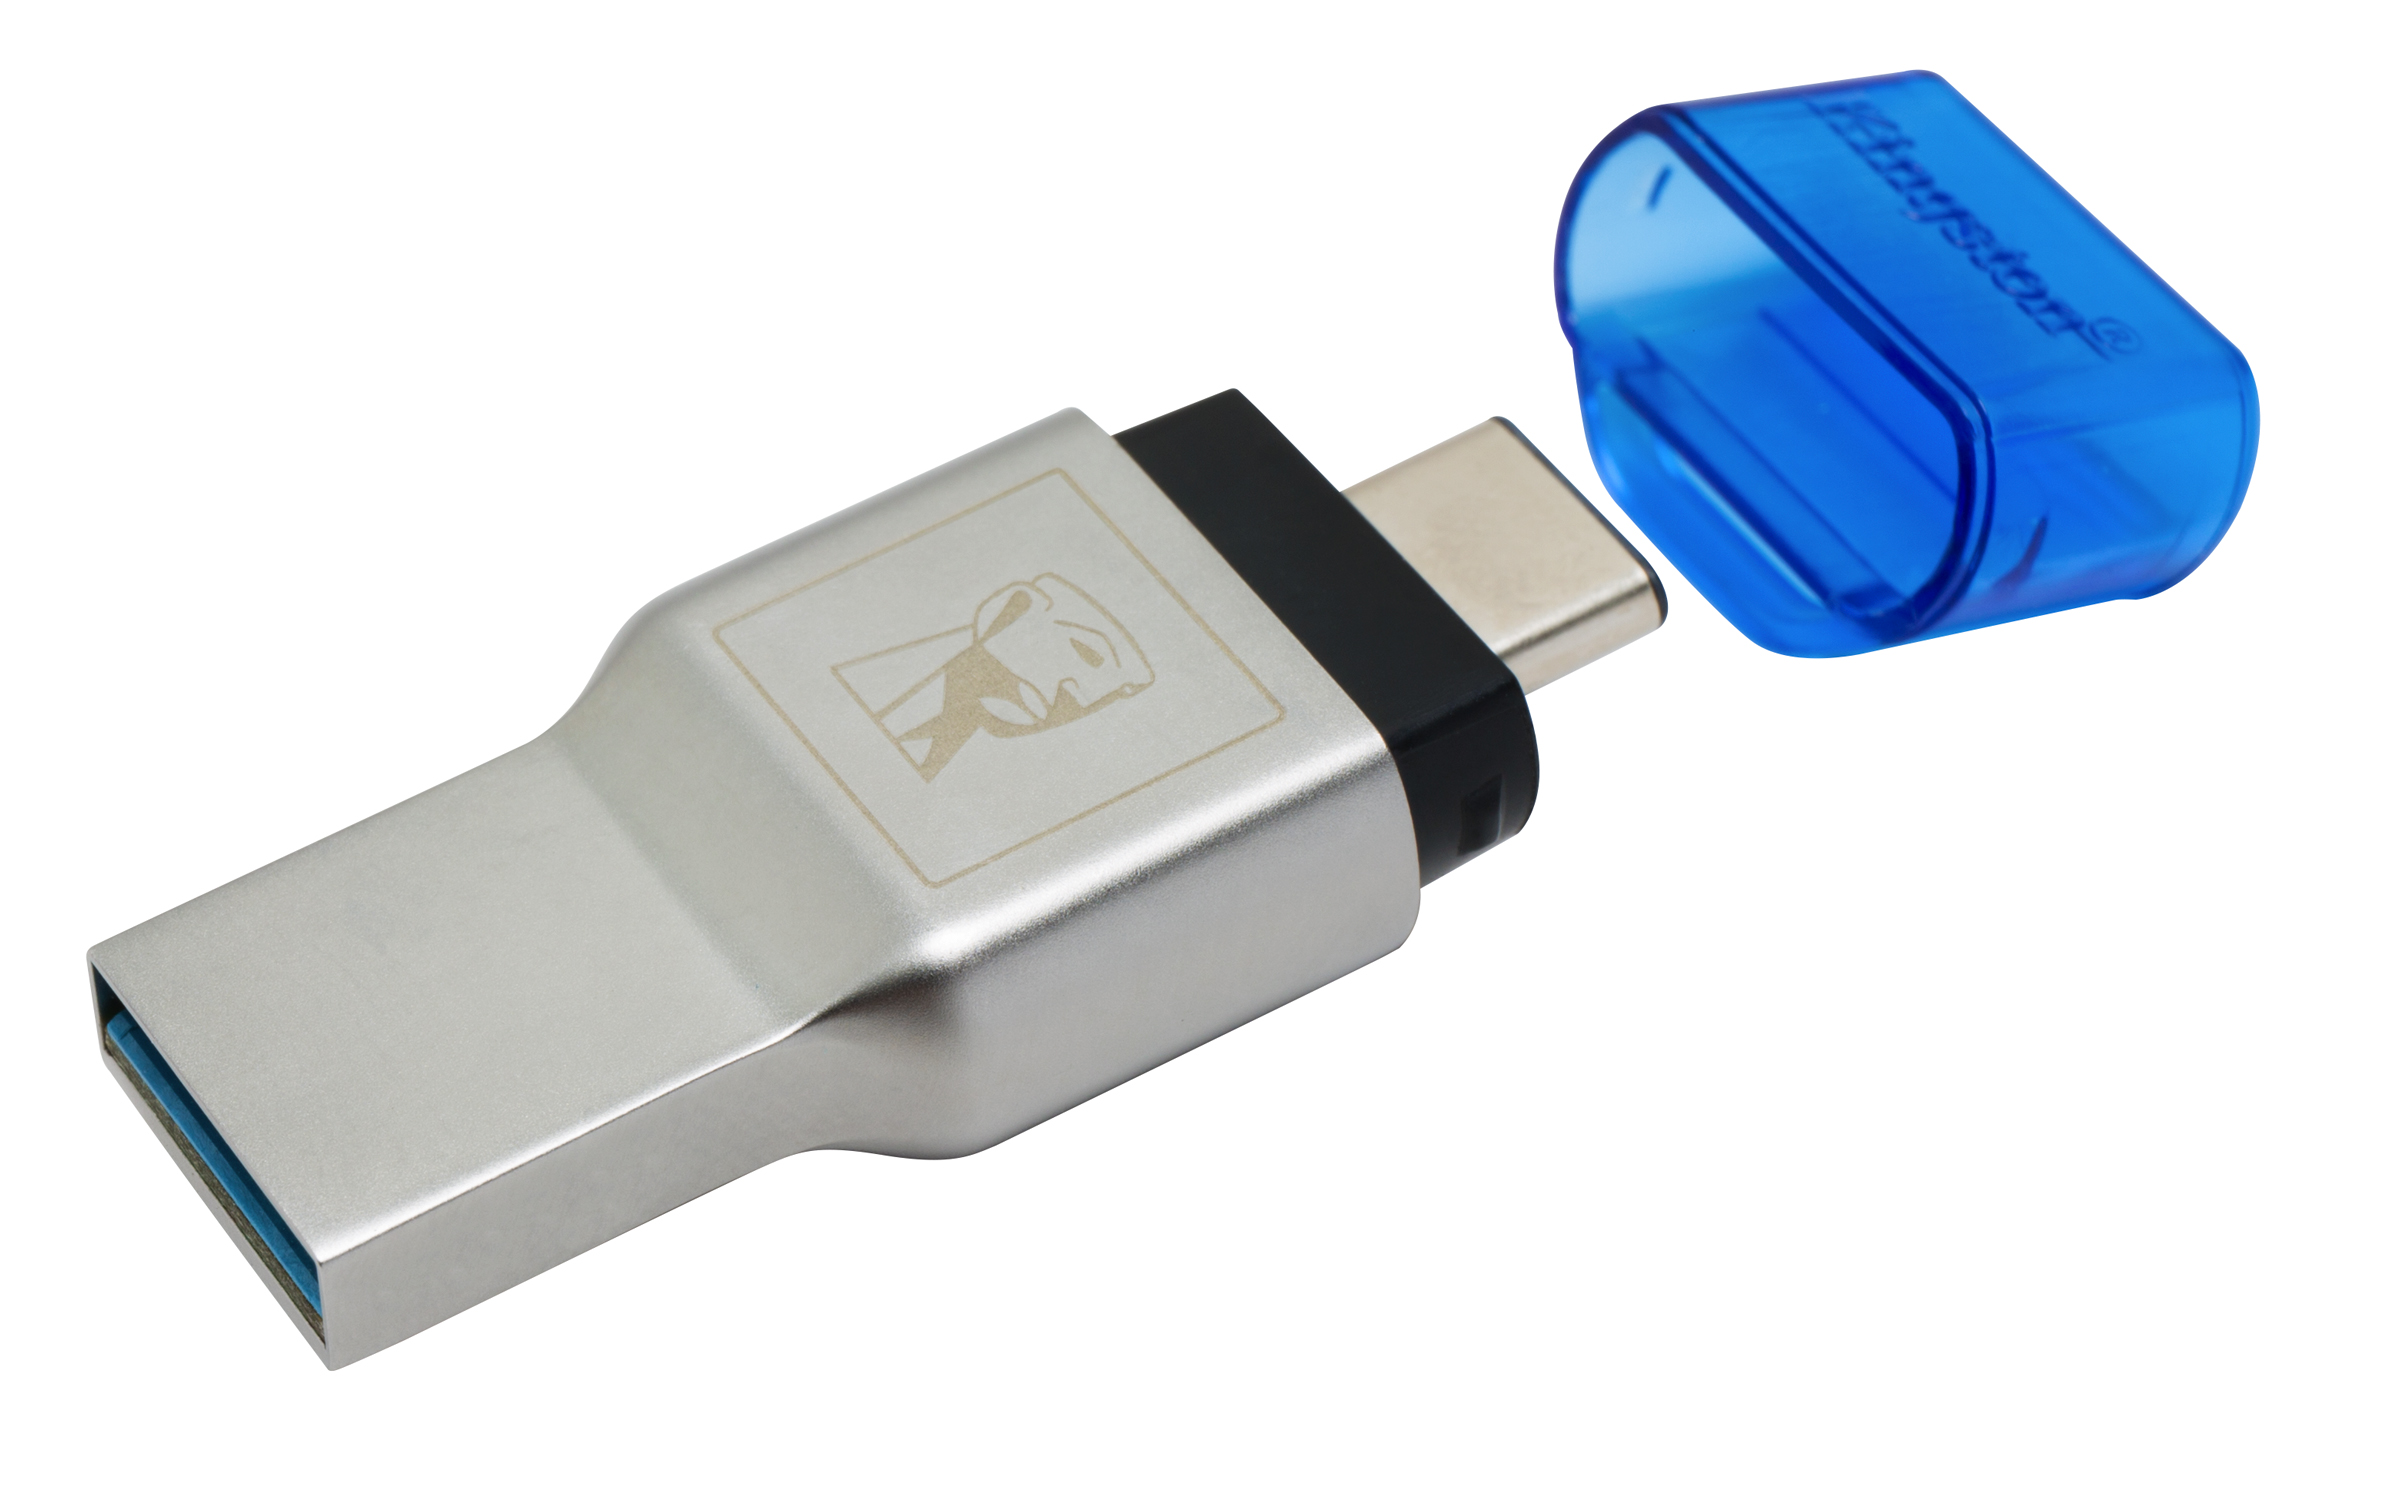 kingston microsd card reader usb type c 2 Kingston เปิดตัว MicroSD Card Reader ในแบบ USB Type C รุ่นใหม่ล่าสุด